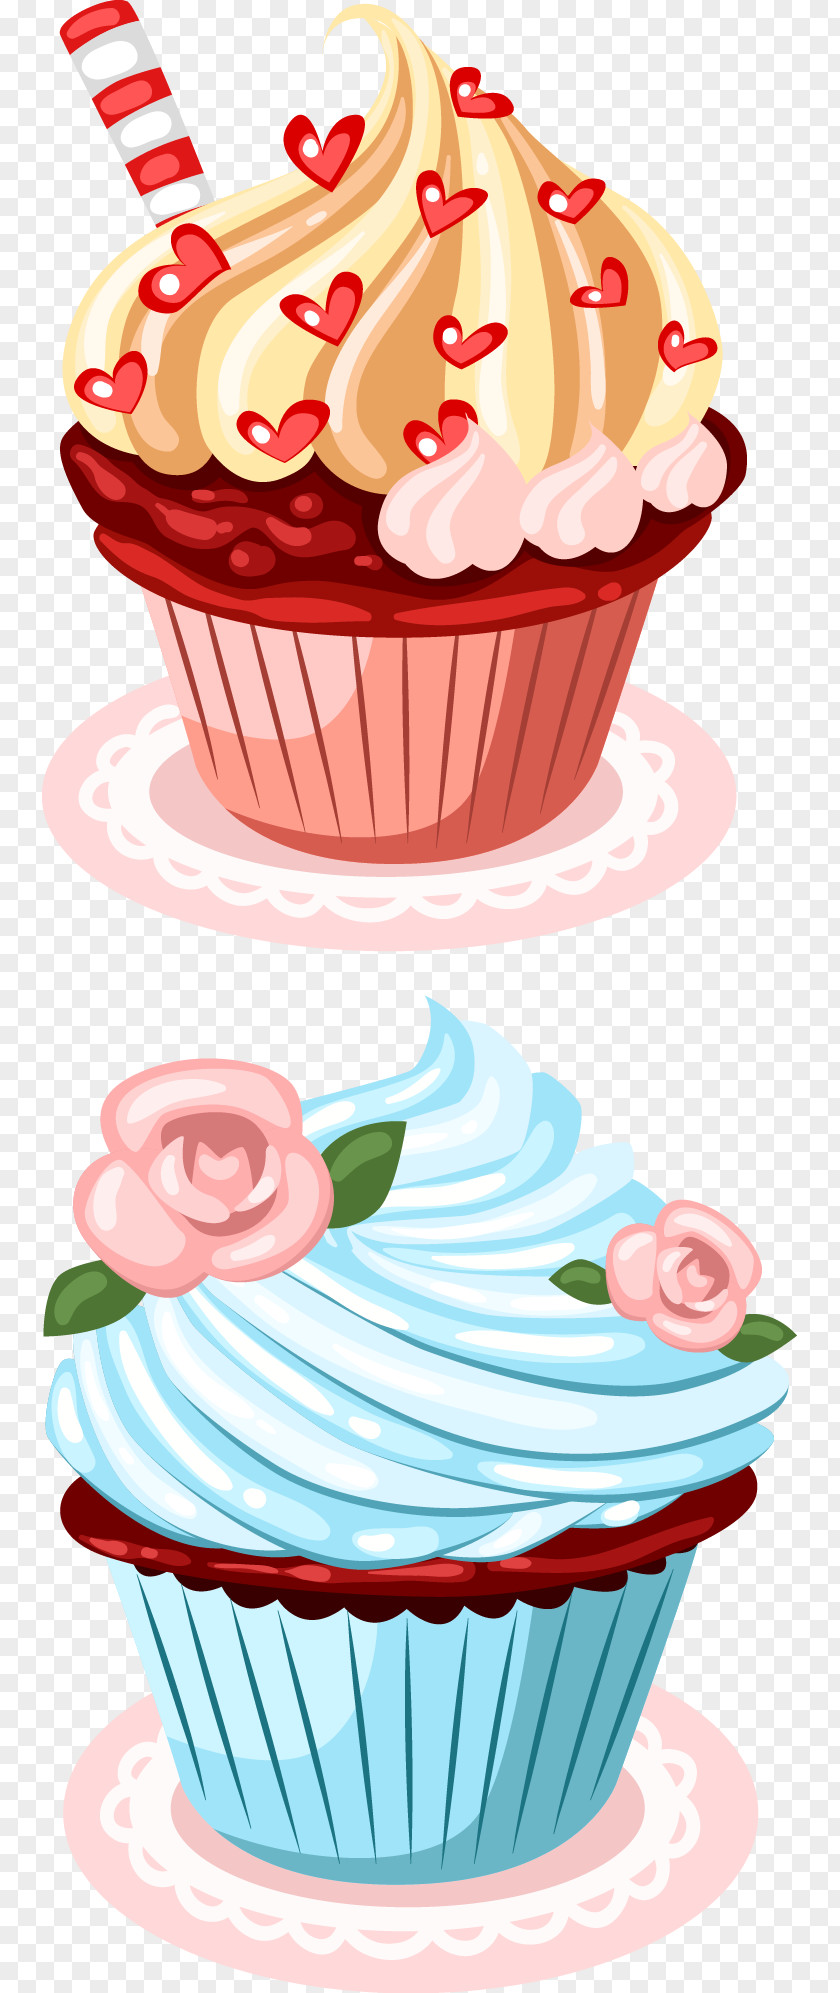 Cupcake Design Vector Image Birthday Cake Greeting Card Wish PNG